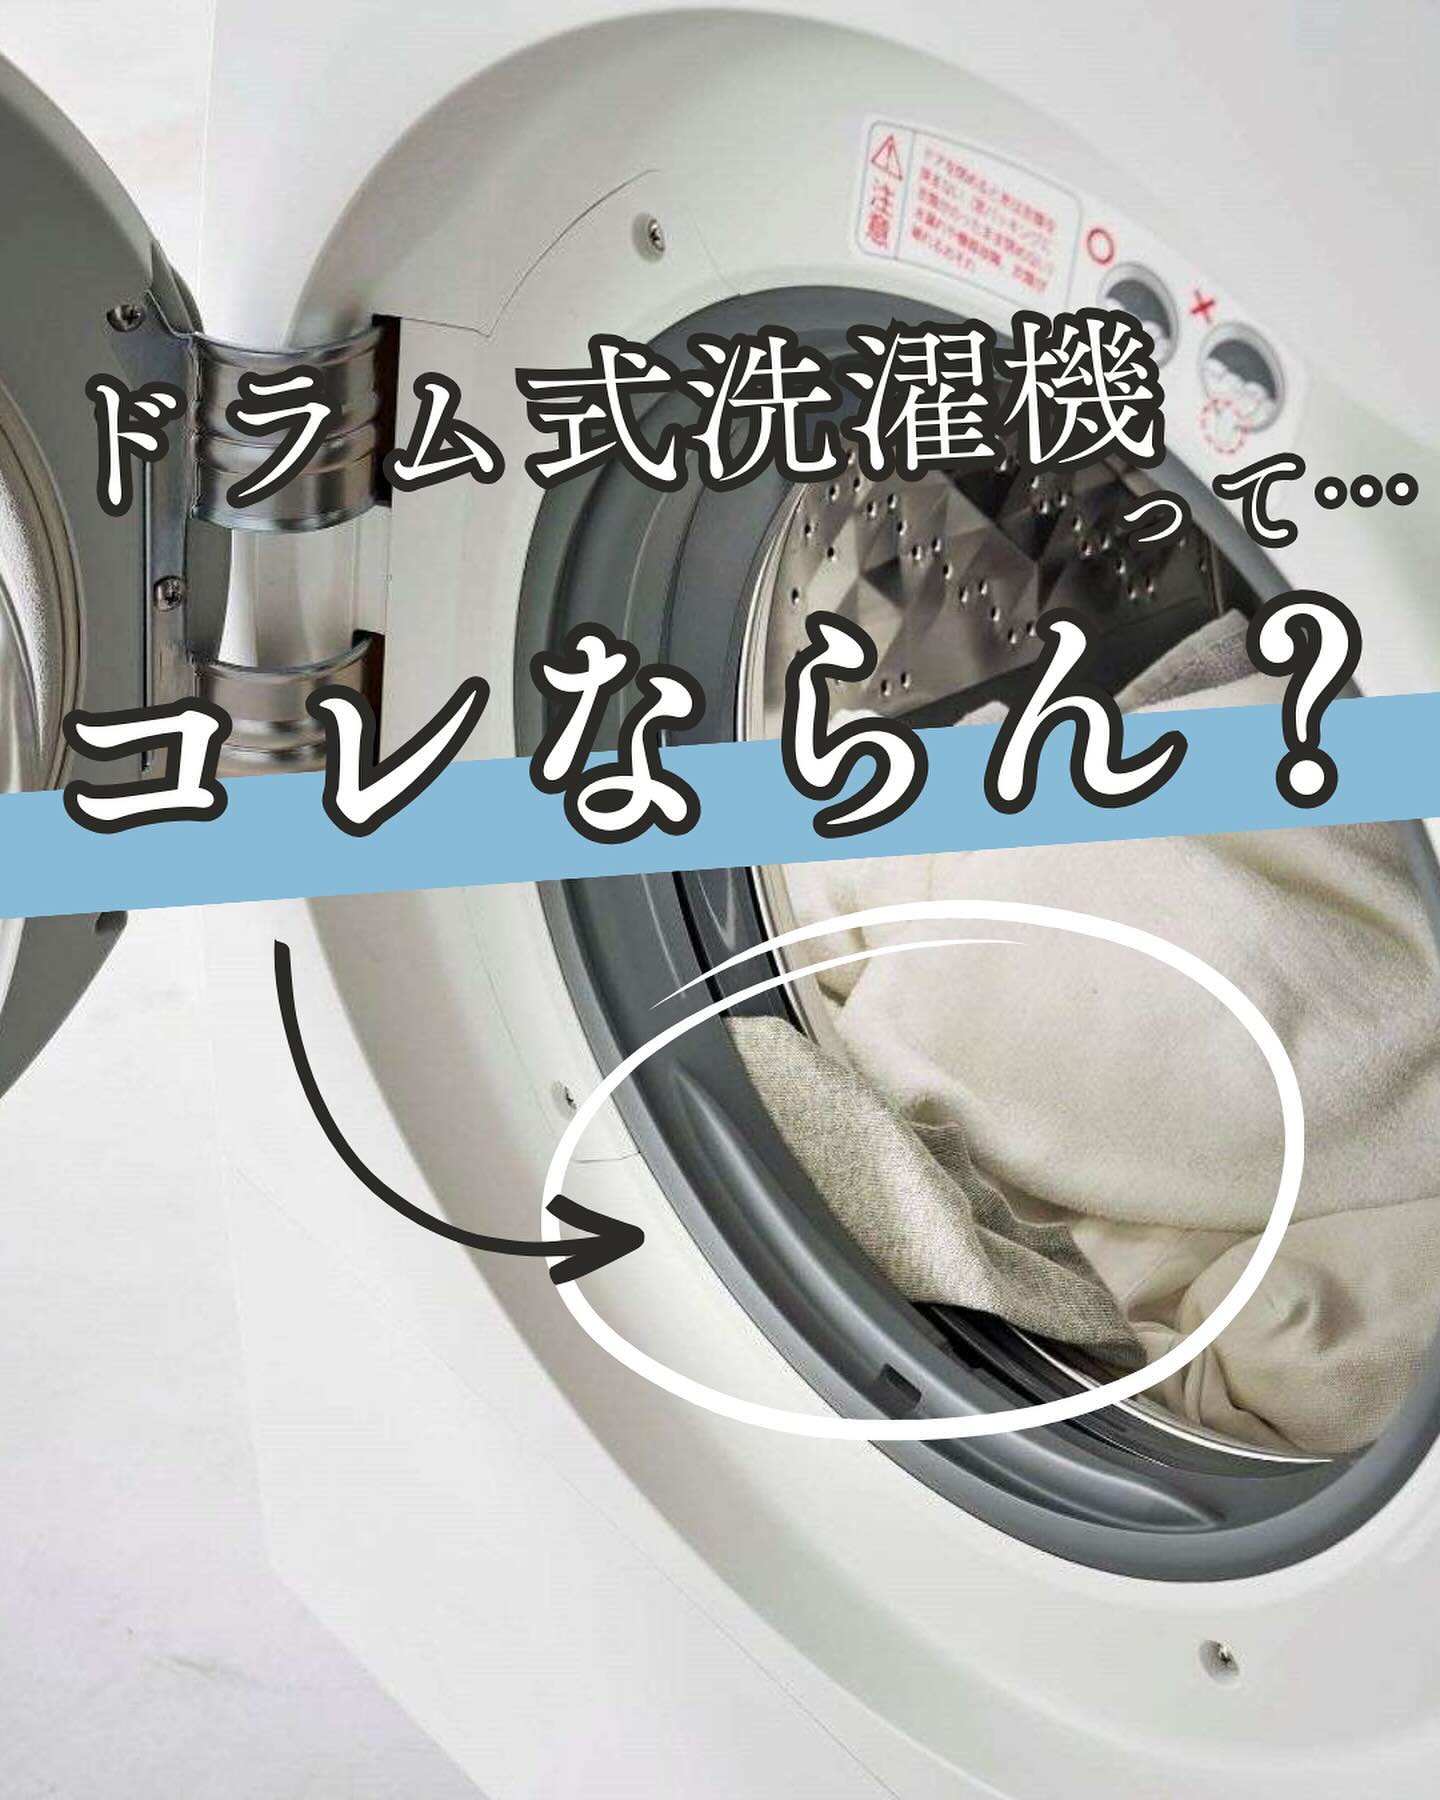 Plate】 ドラム式洗濯機ドアパッキン小物挟まり防止カバー ホワイト 